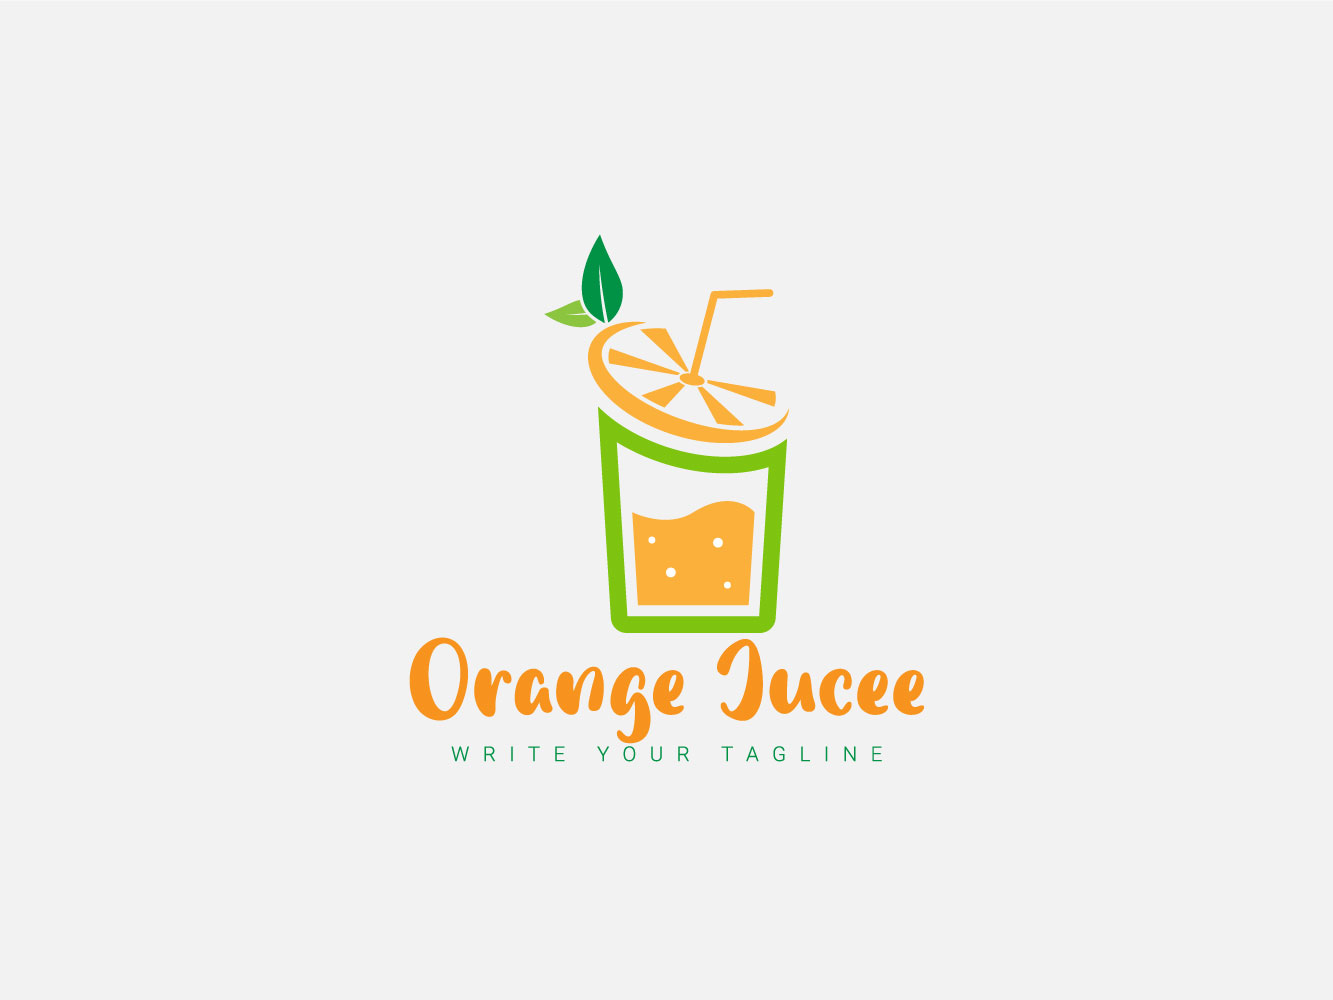 Orange Juice Logo With Glass Orange Slice, Natural Drinking Vecror Design